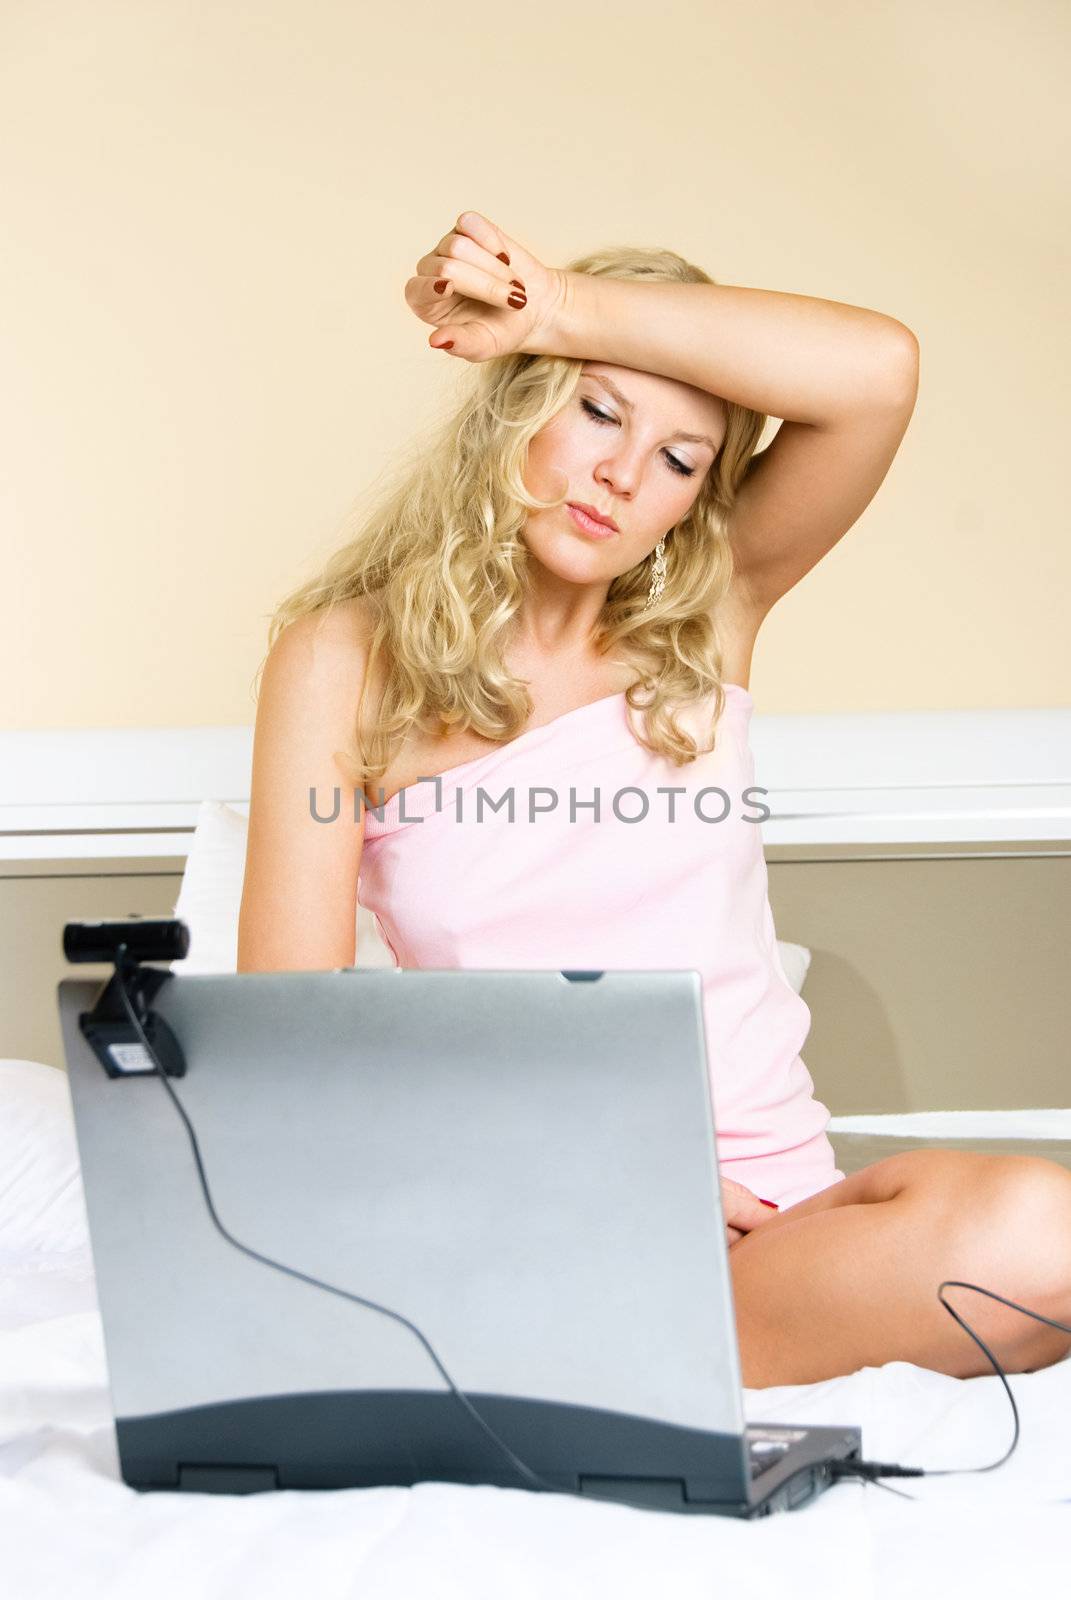 bored girl communicating using a web camera by lanak